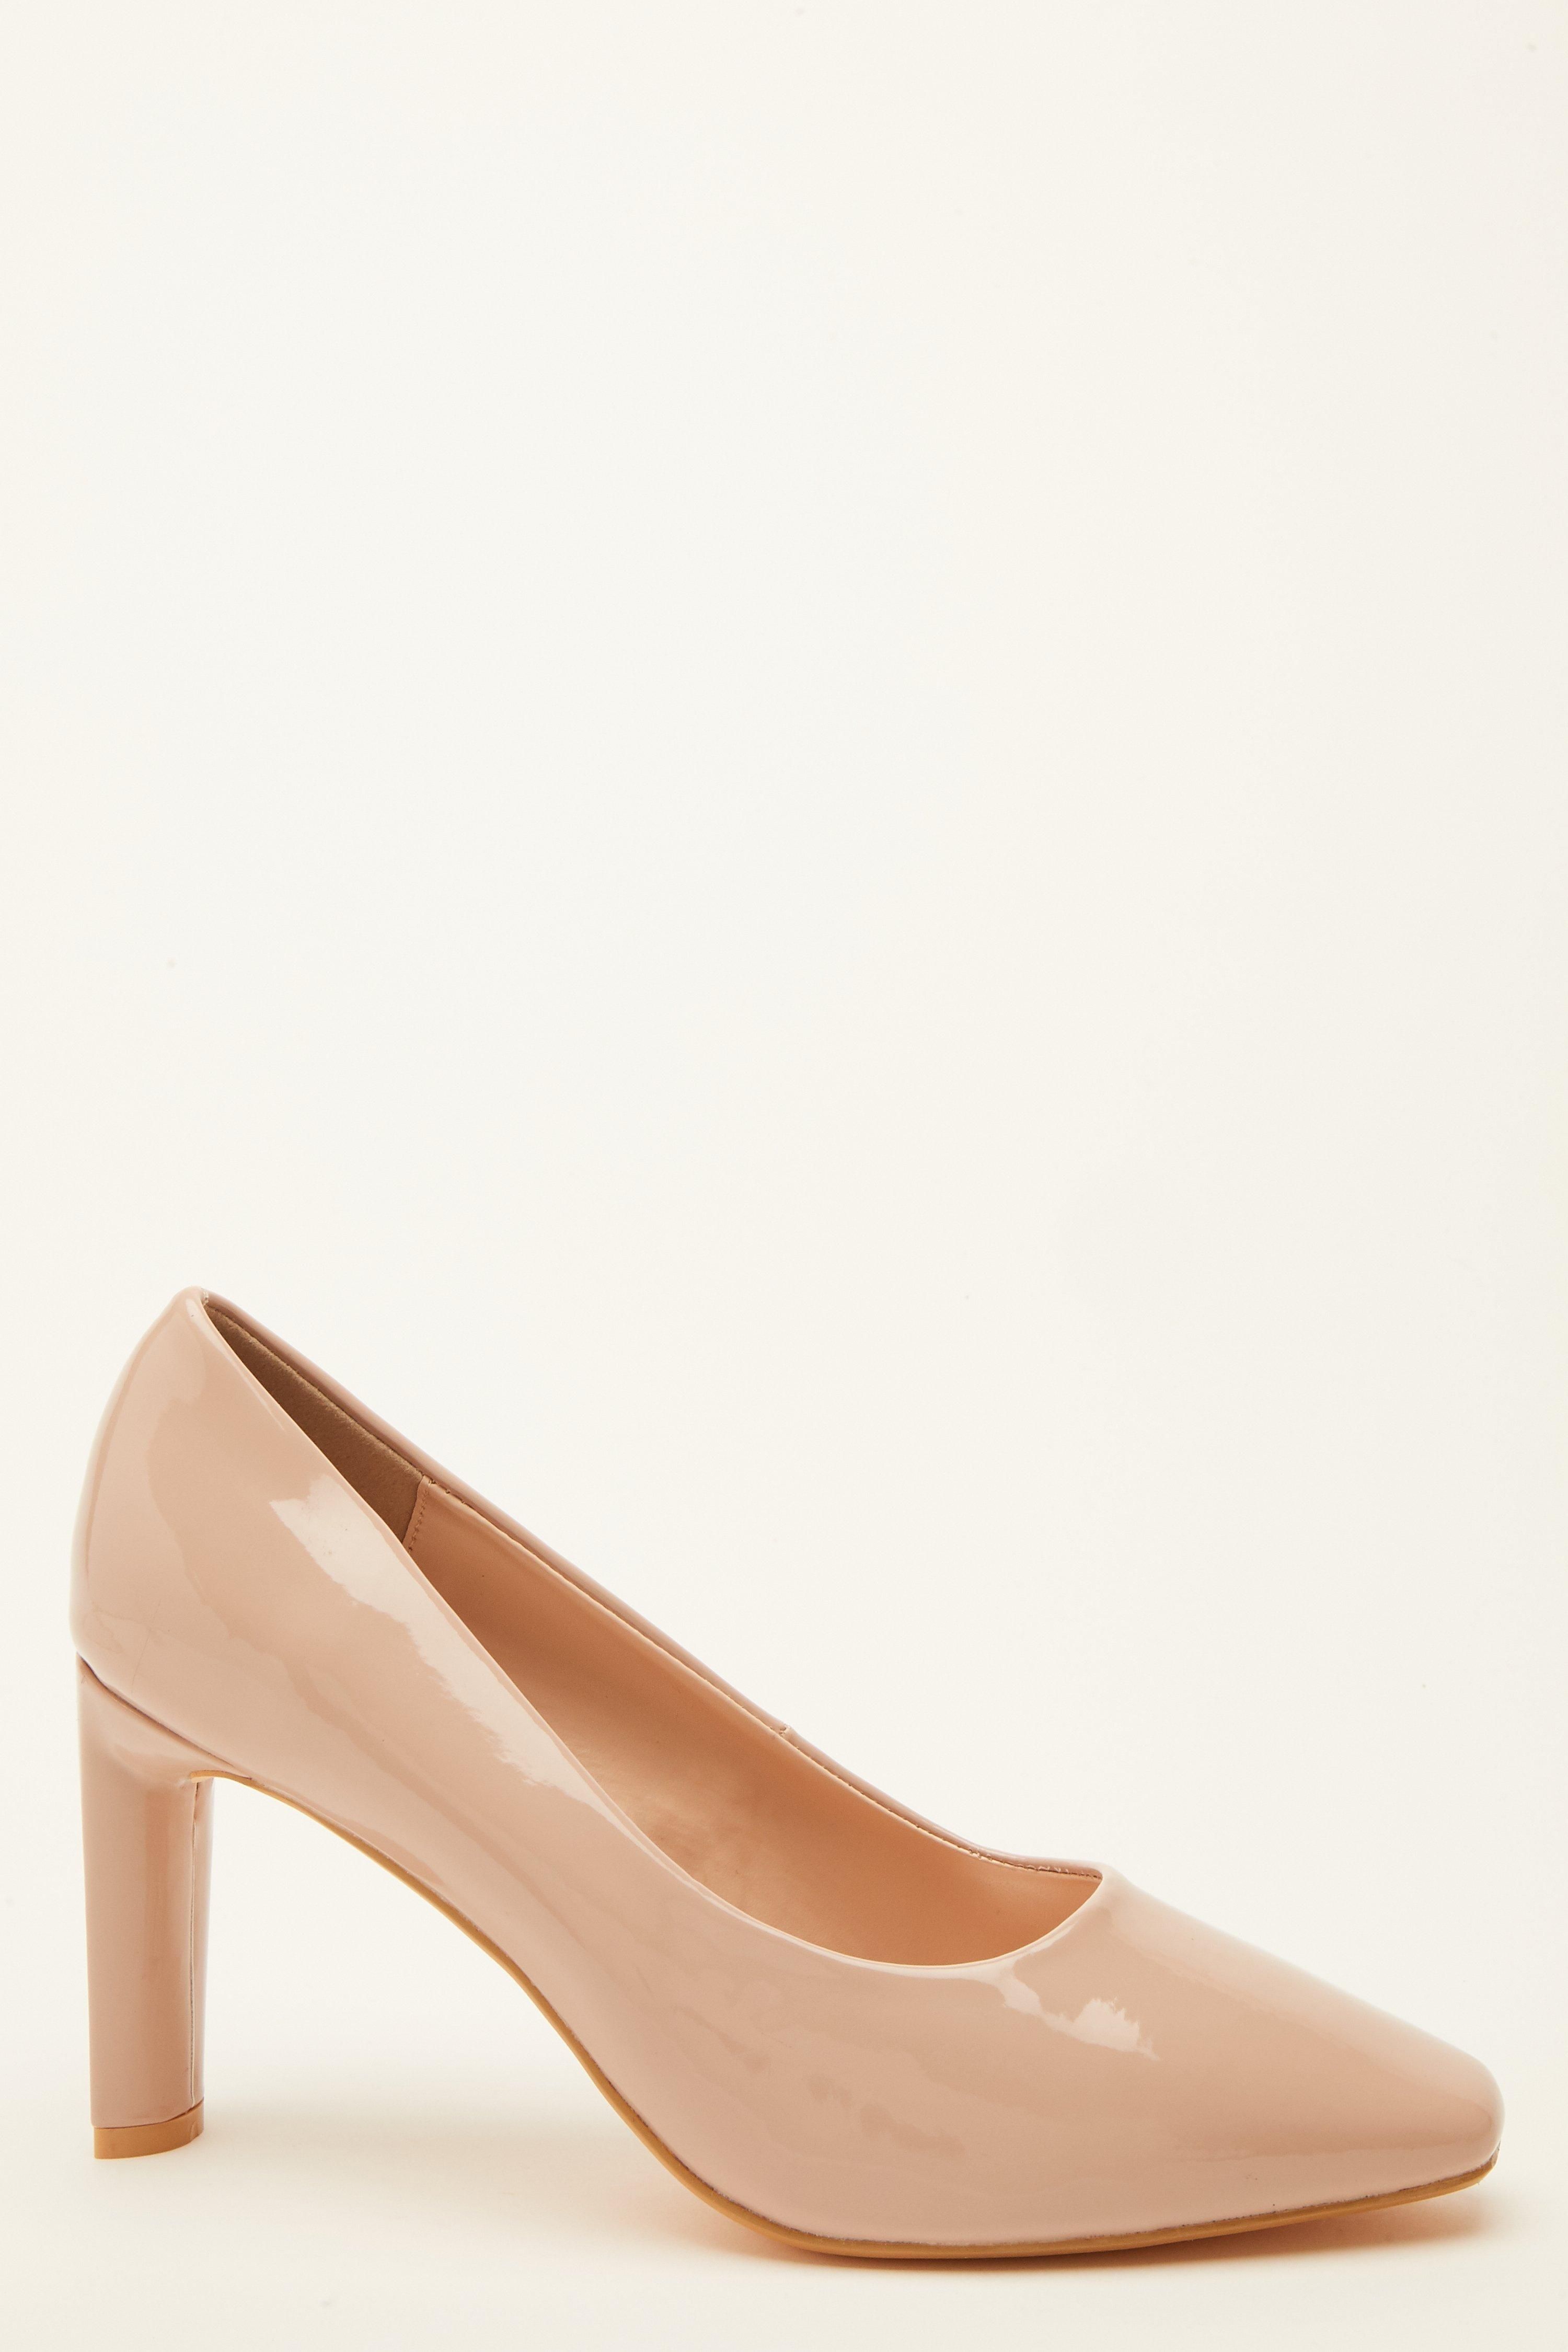 - Court style  - Patent finish  - Closed toe style  - Thin heel  - Heel height: 3.5